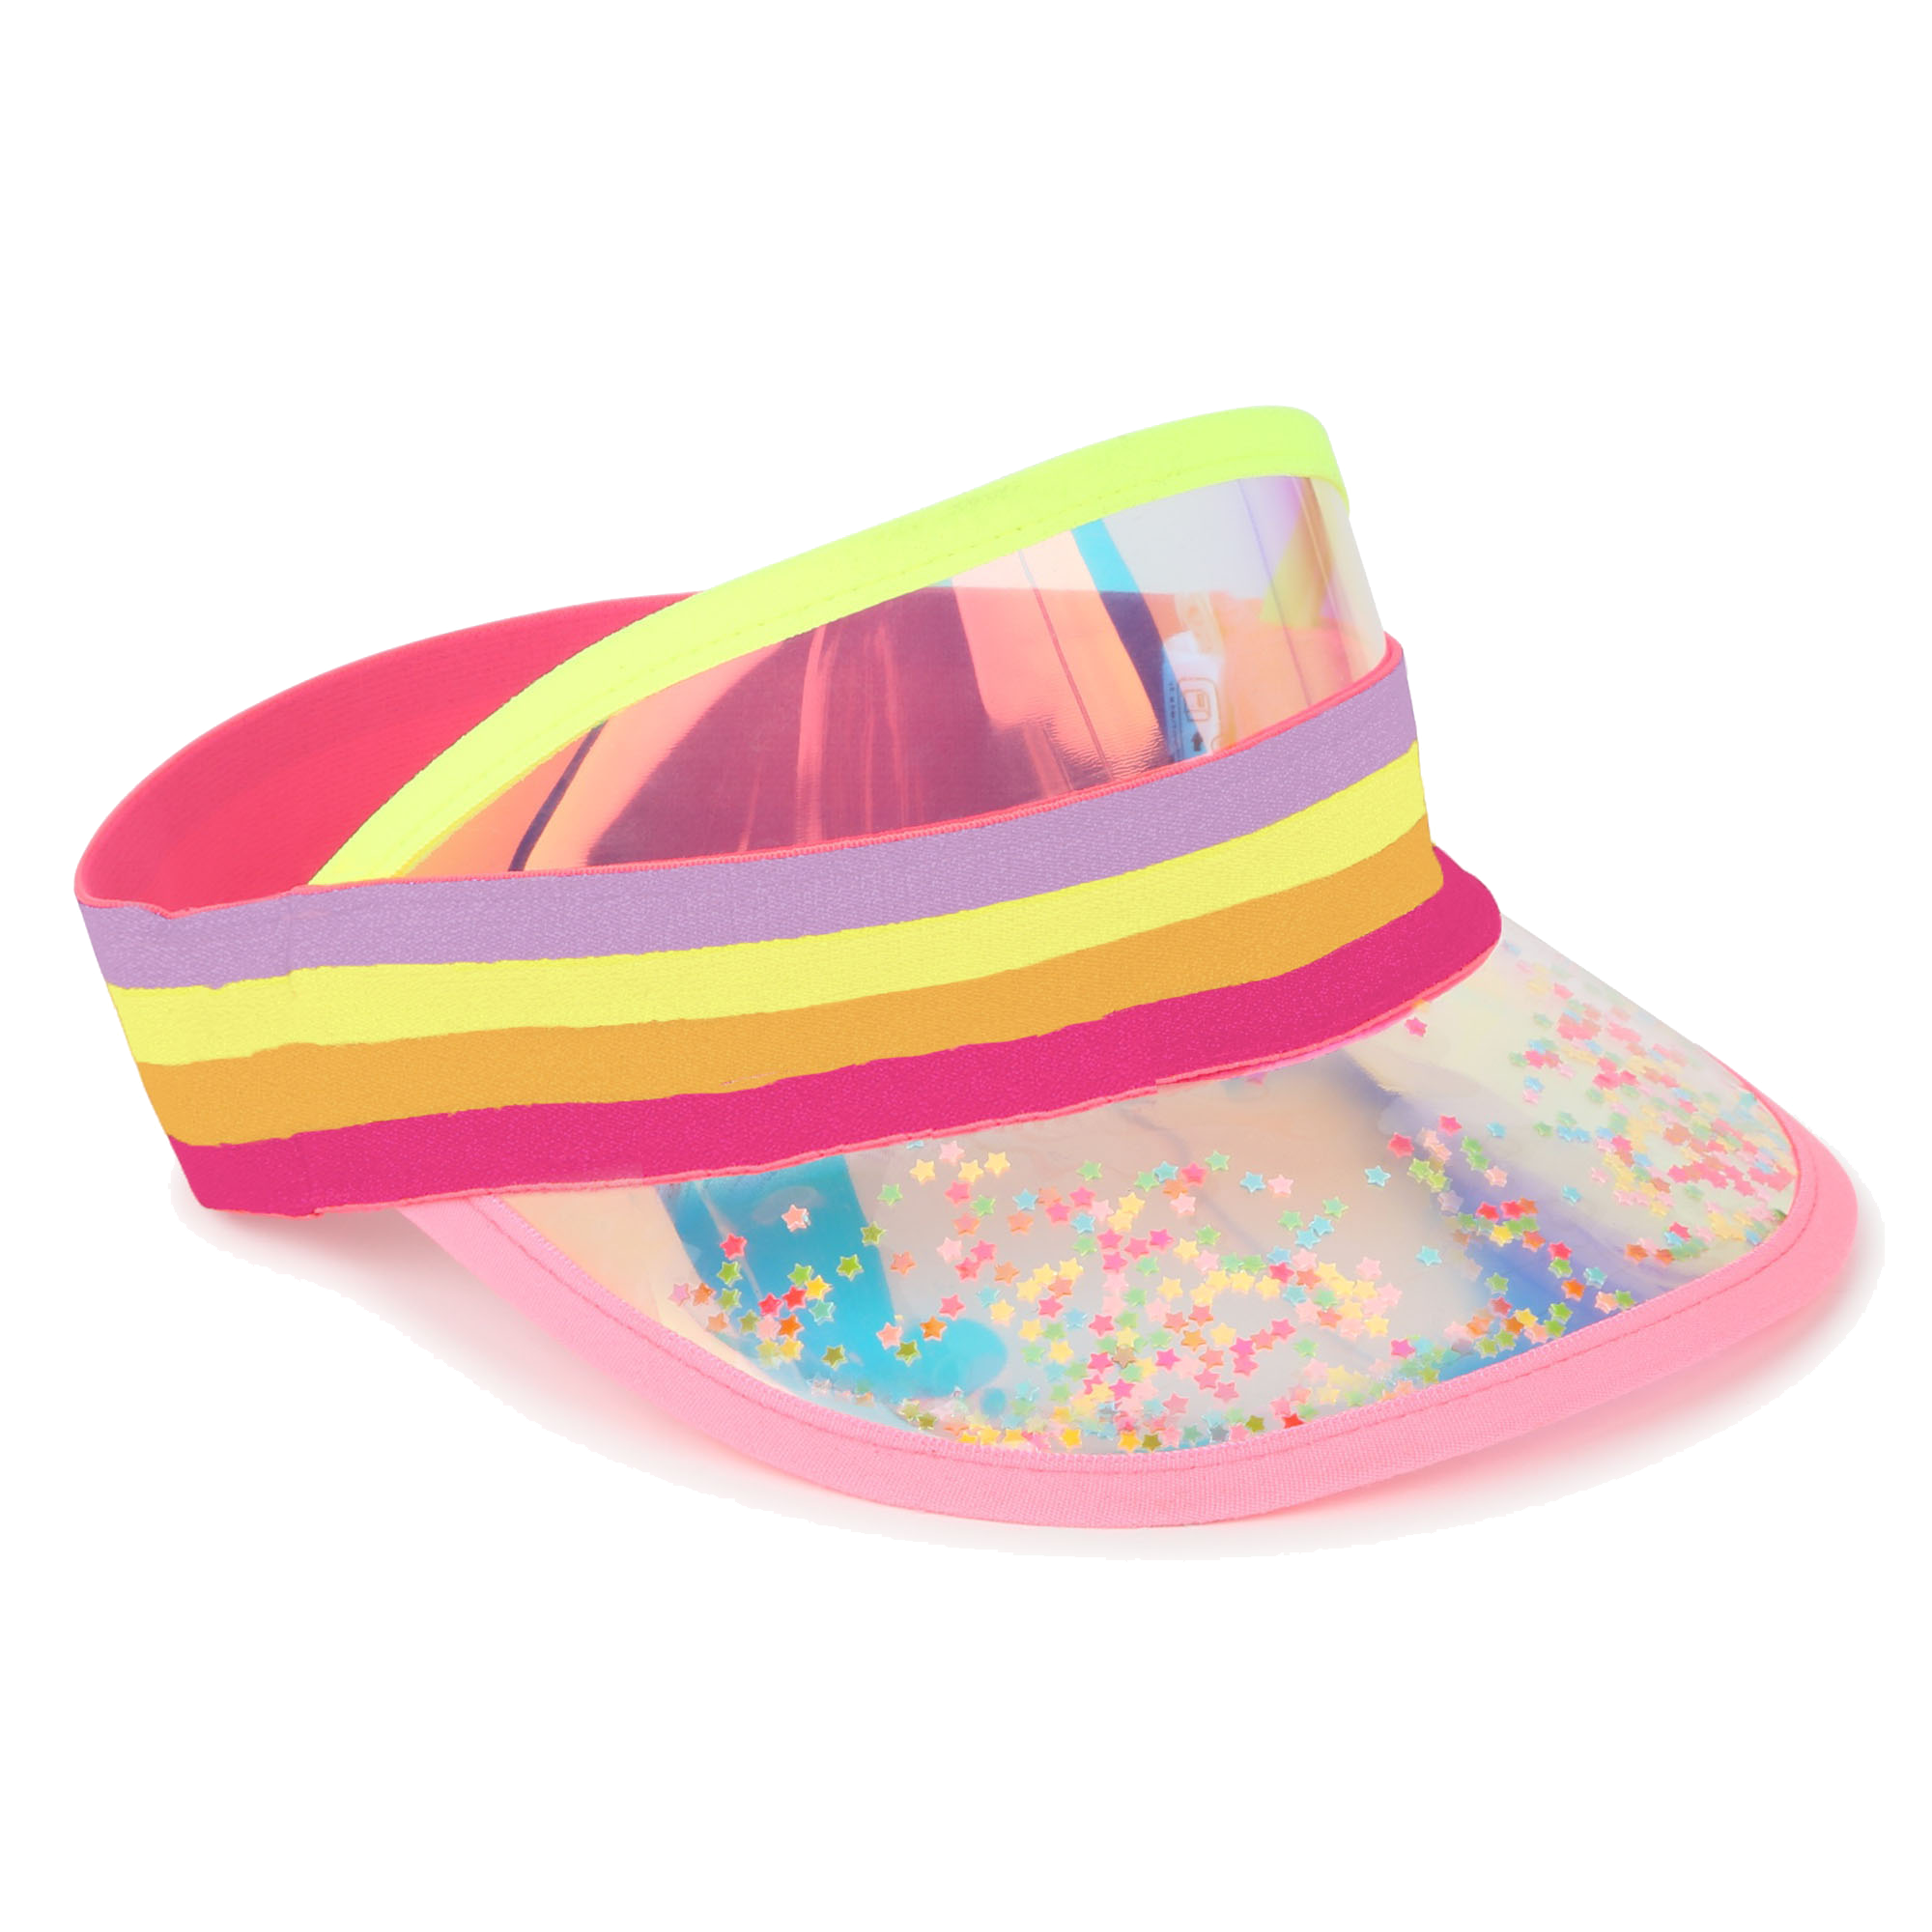 Billieblush logo-embroidered visor hat - Pink